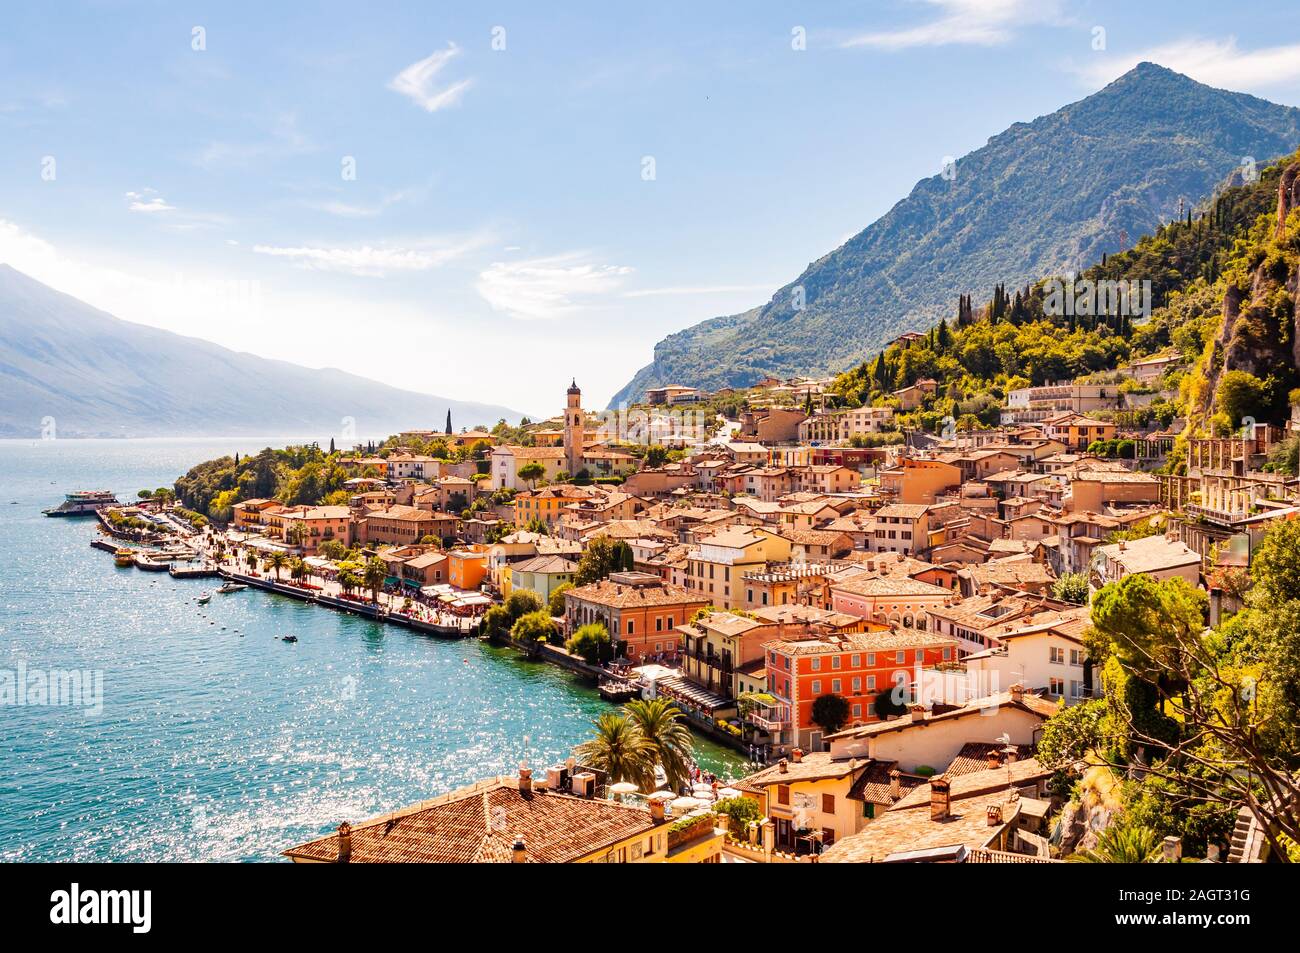 Limone Sul Garda cityscape on the shore of Garda lake surrounded by scenic Northern Italian nature. Amazing Italian cities Stock Photo